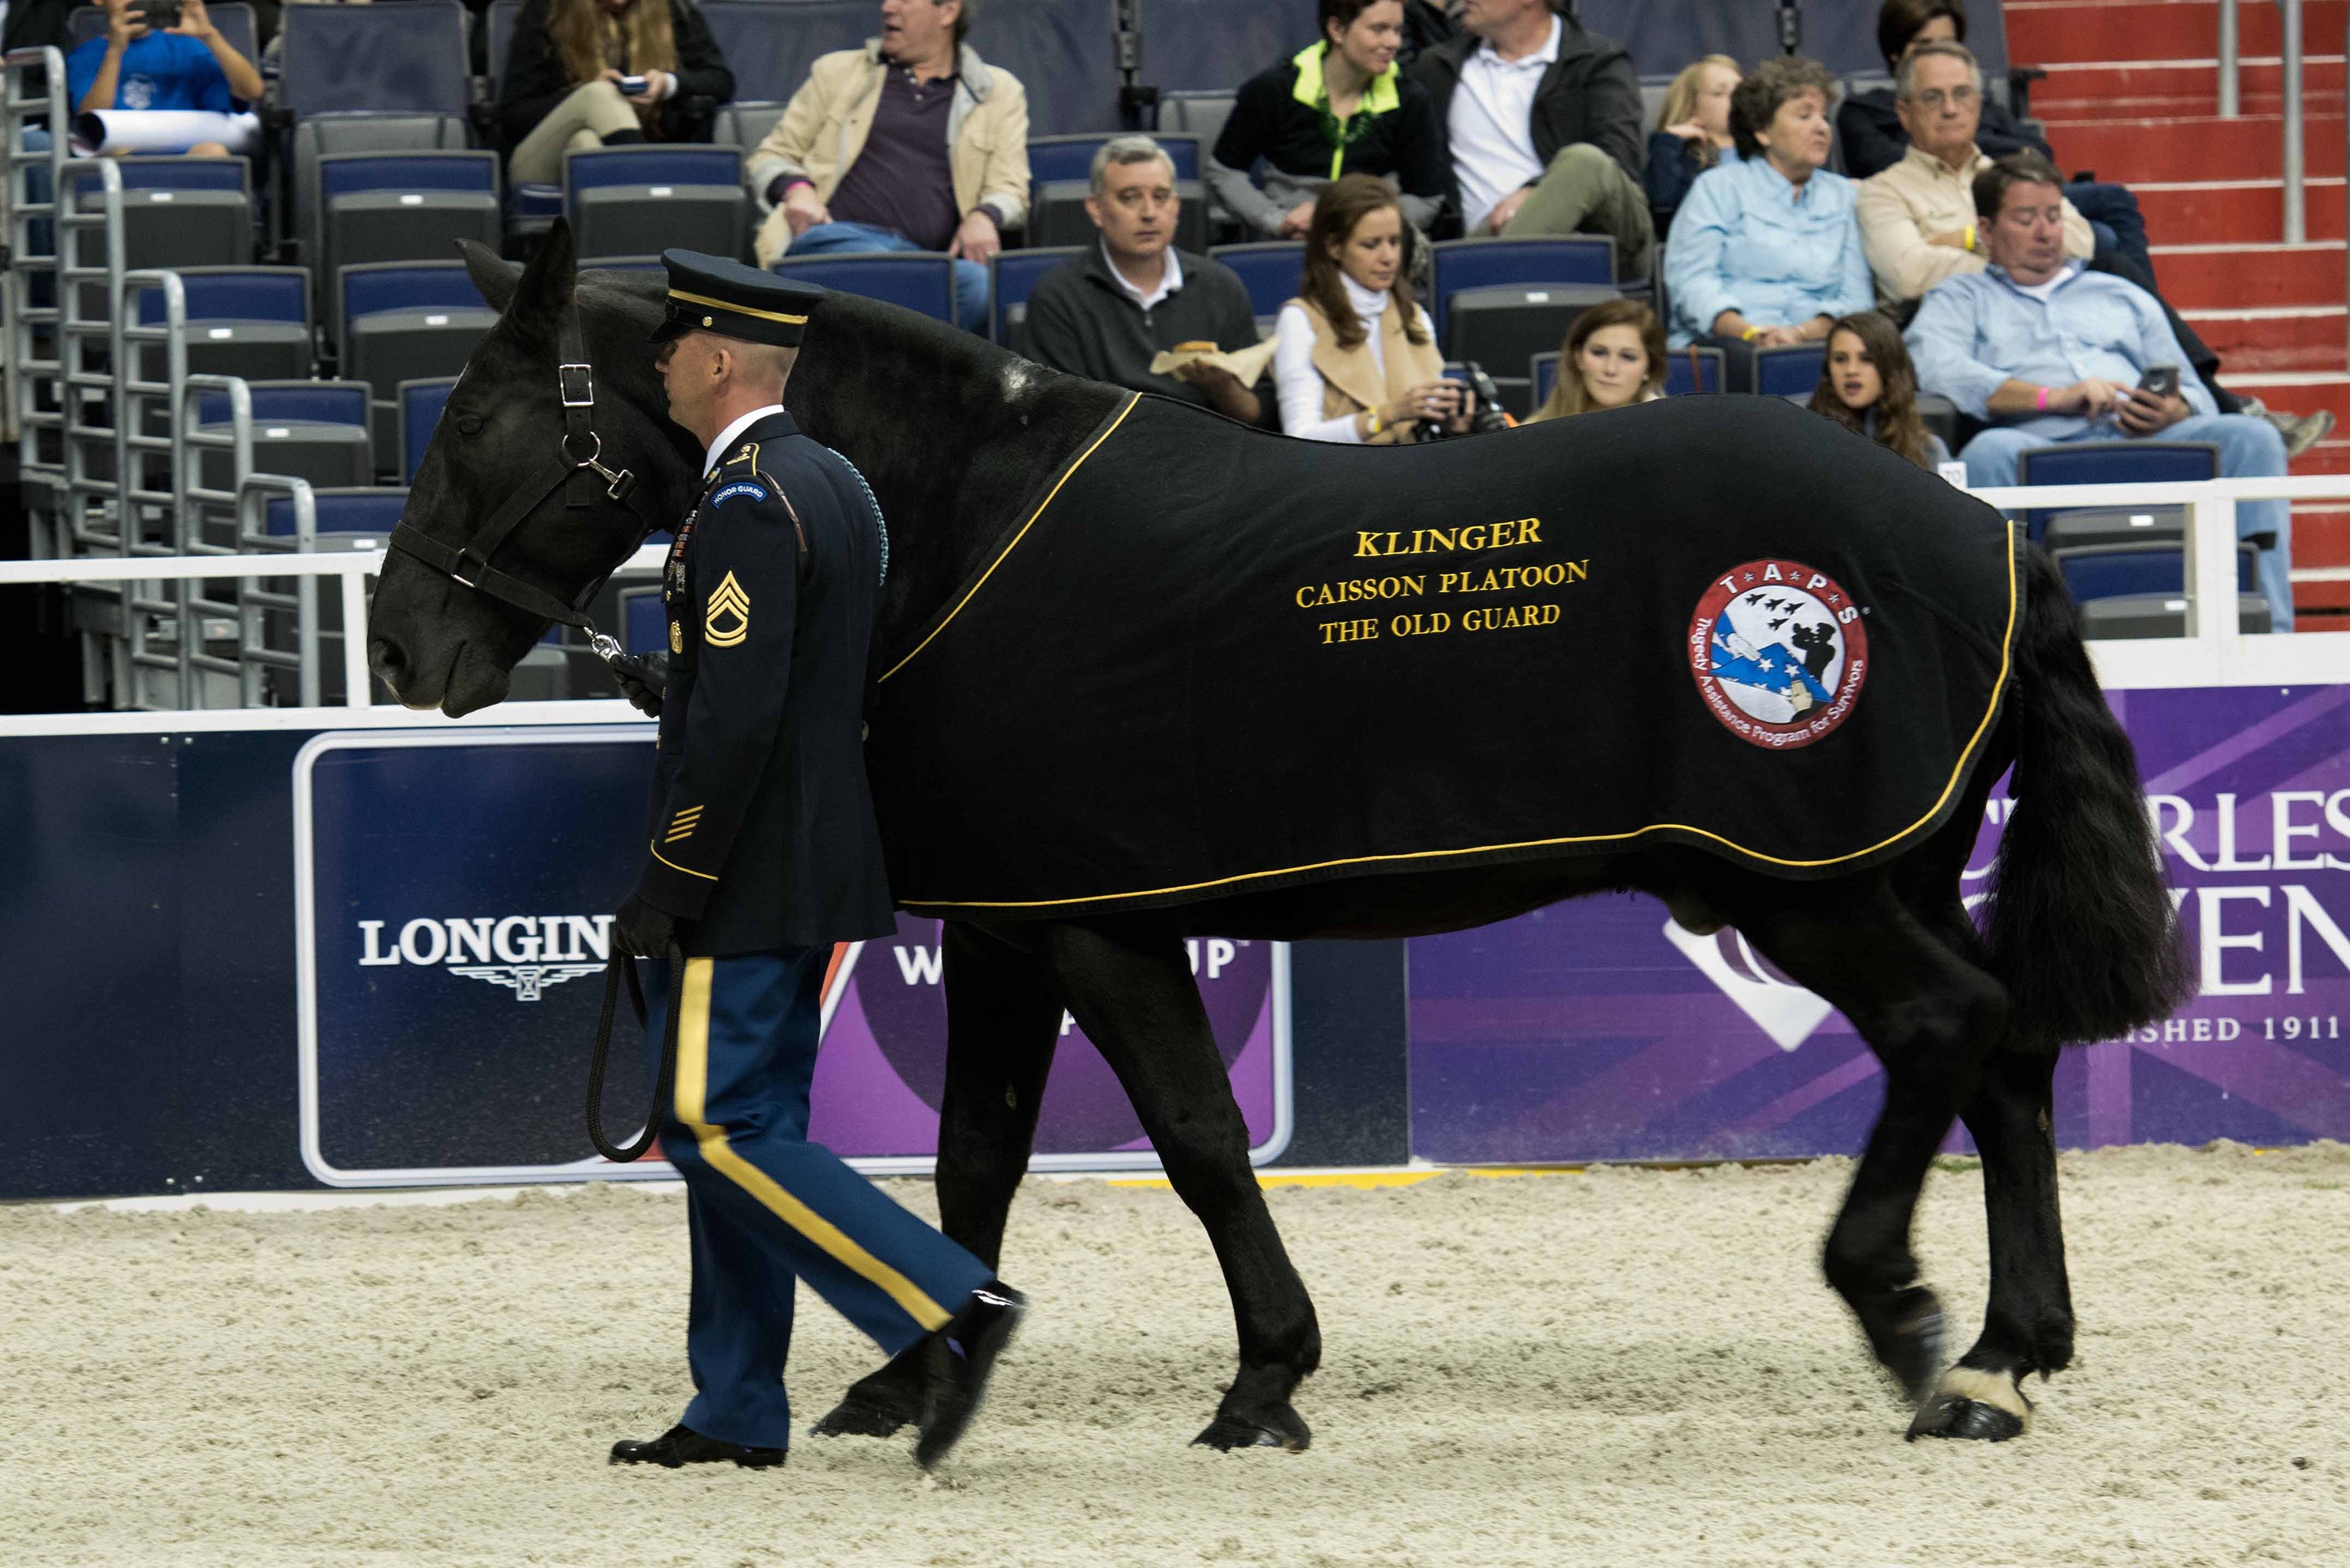 Washington horse show names award after Old Guard Caisson horse Klinger